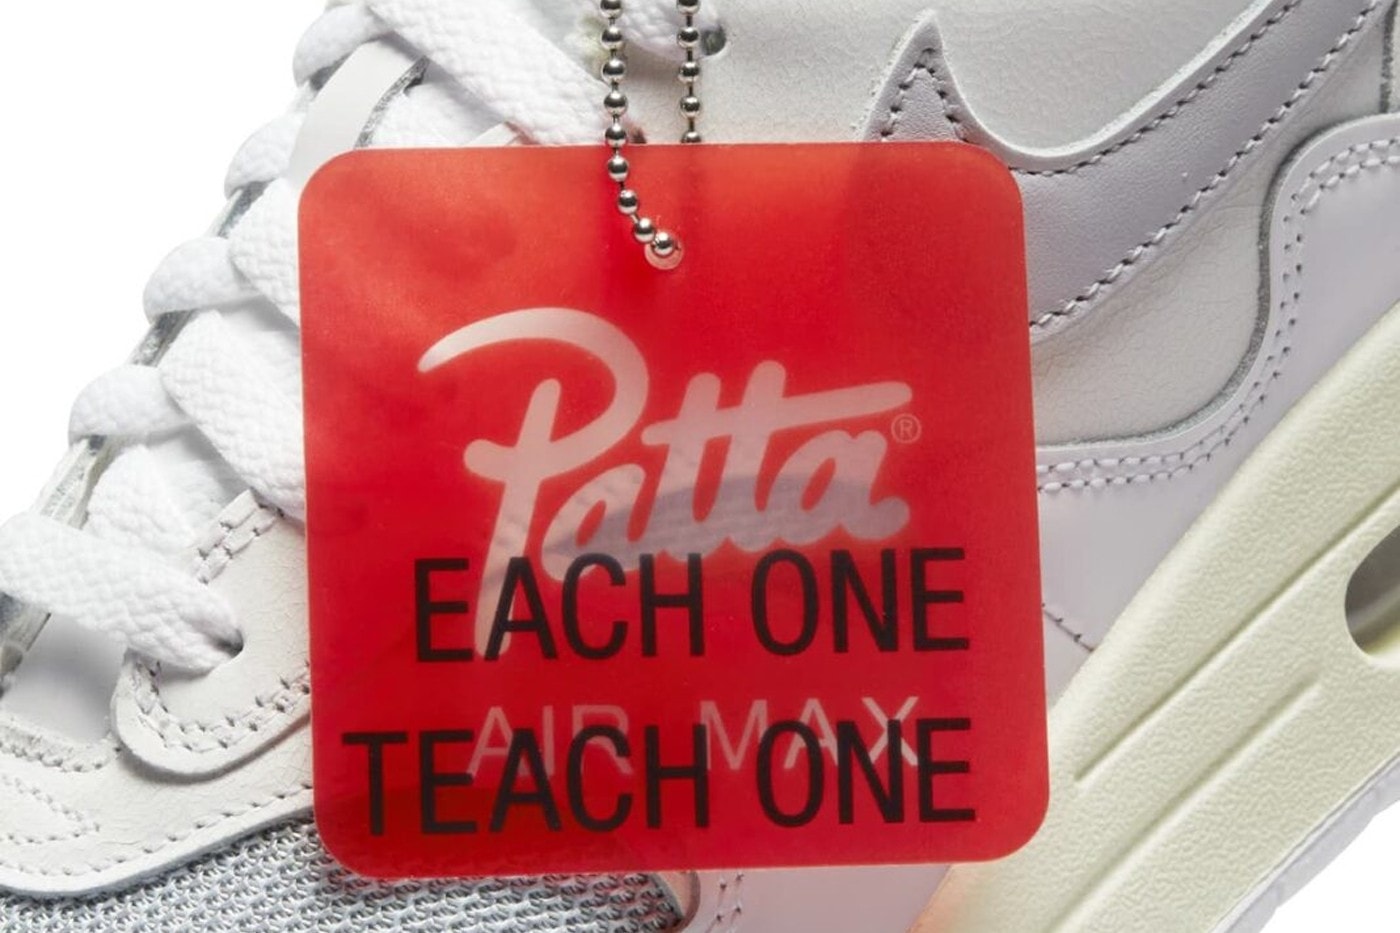 Patta x Nike Air Max 1 最新聯名配色「White」發售日期正式確立